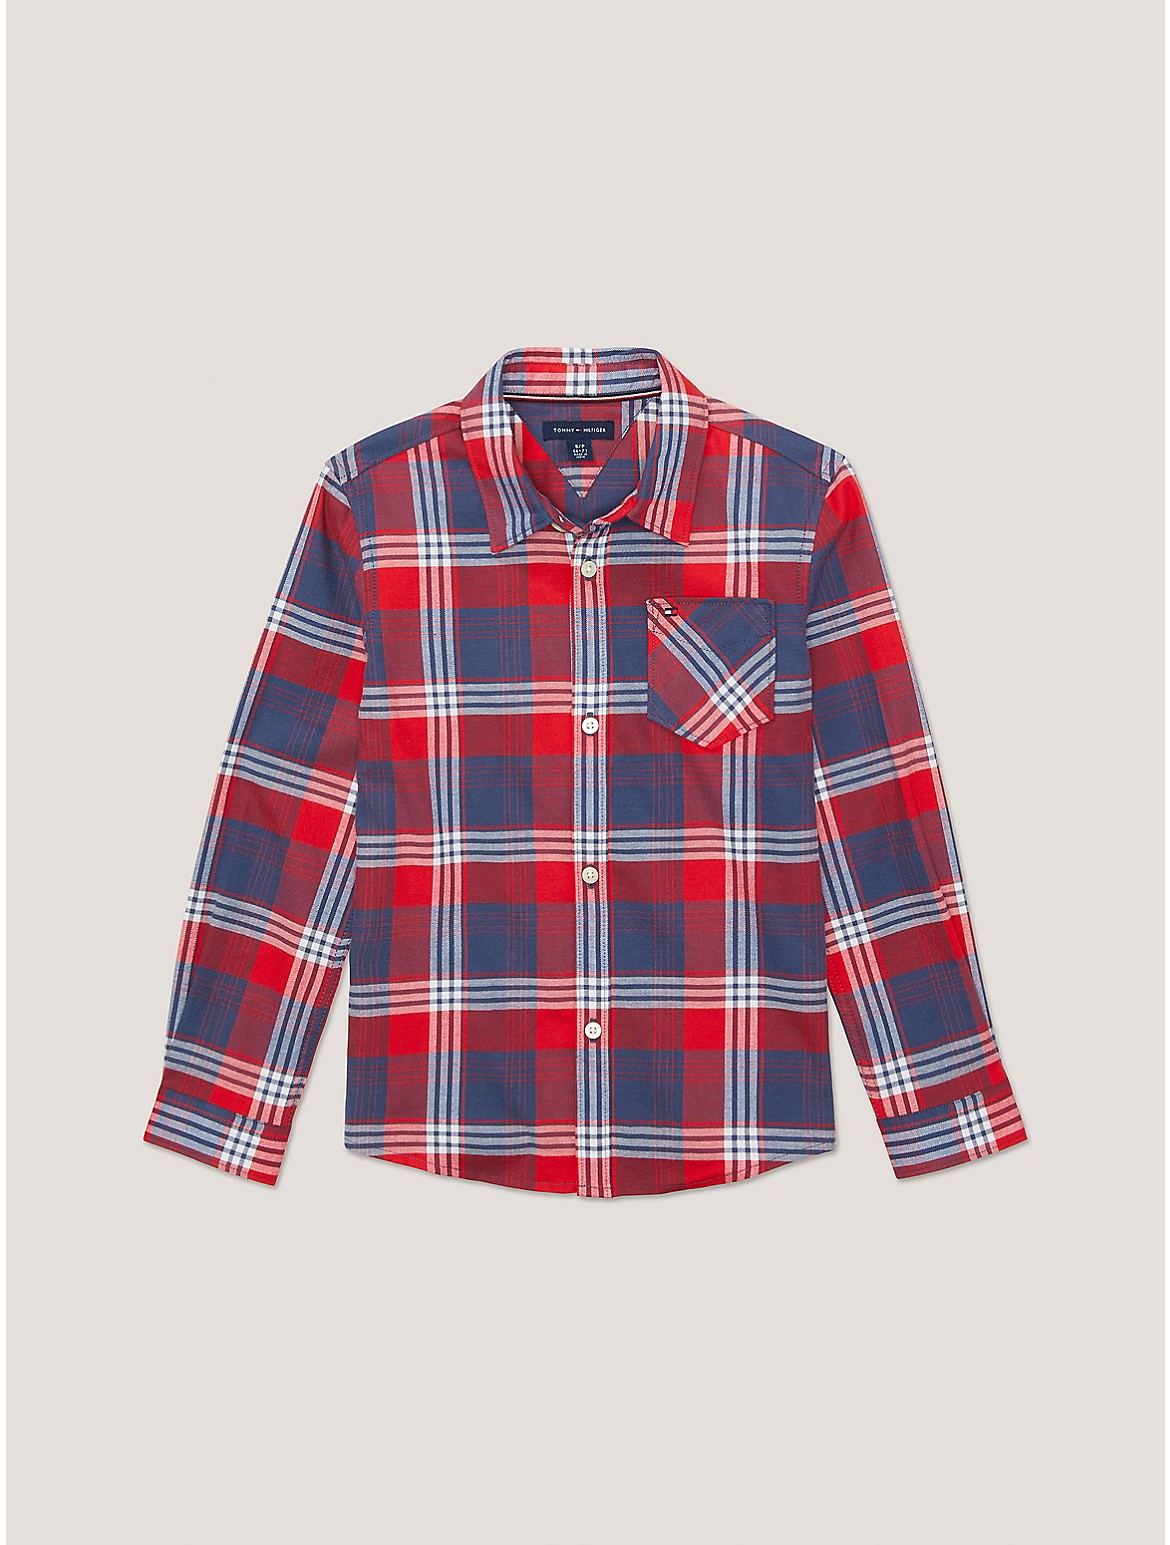 Tommy Hilfiger Boys' Kids' Plaid Shirt - Red - L